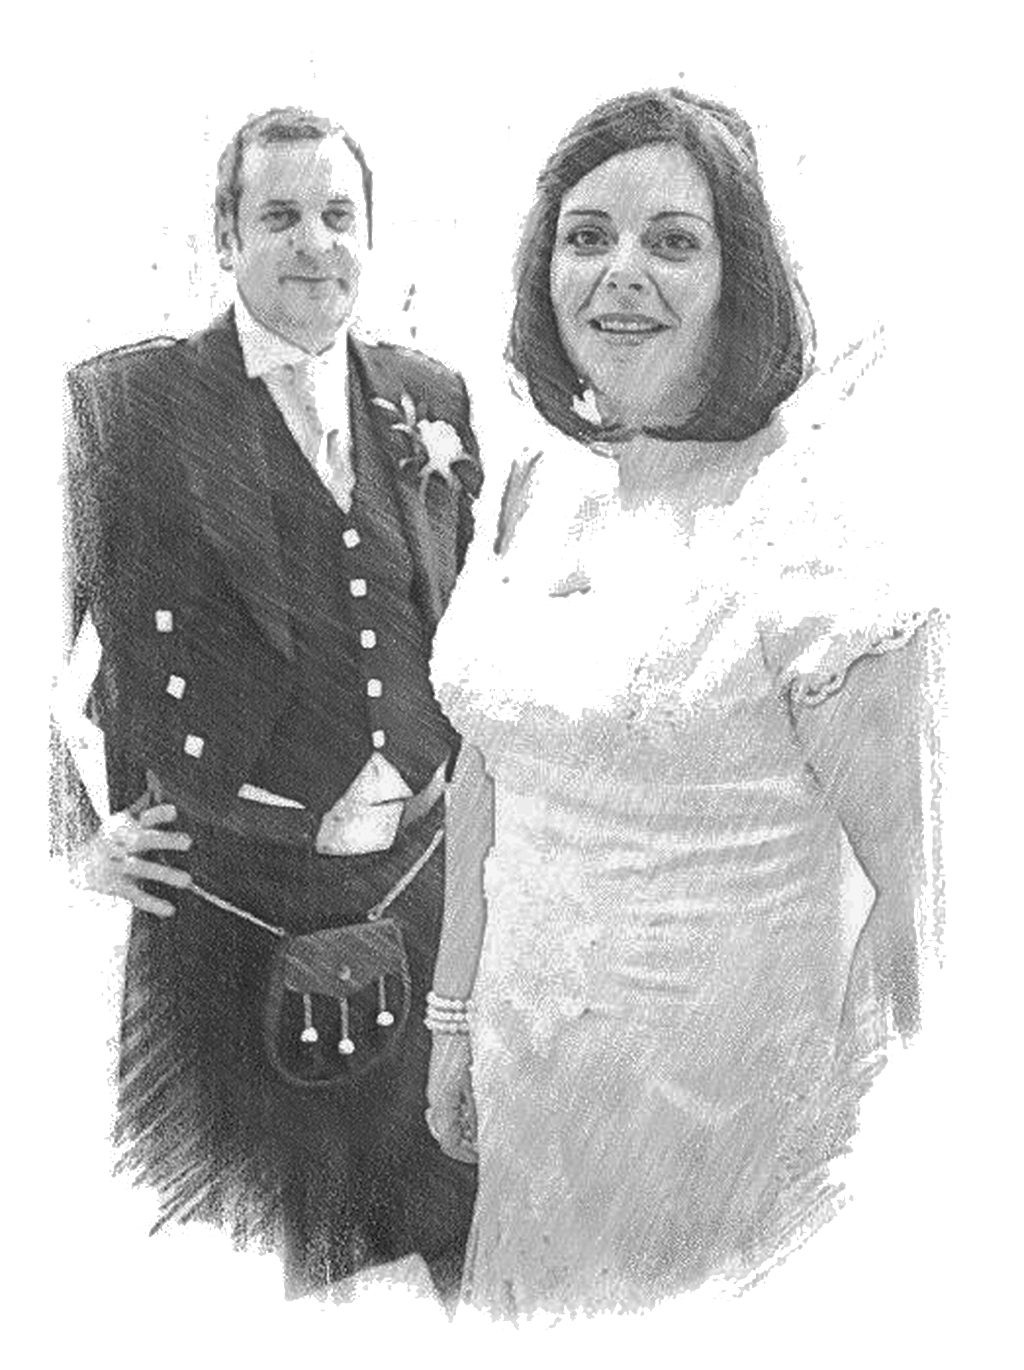 Iain and Janice Shand - Composed by John C Grant (https://johncgrant.com). Traditional composer from Kilmarnock, Ayrshire, Scotland.